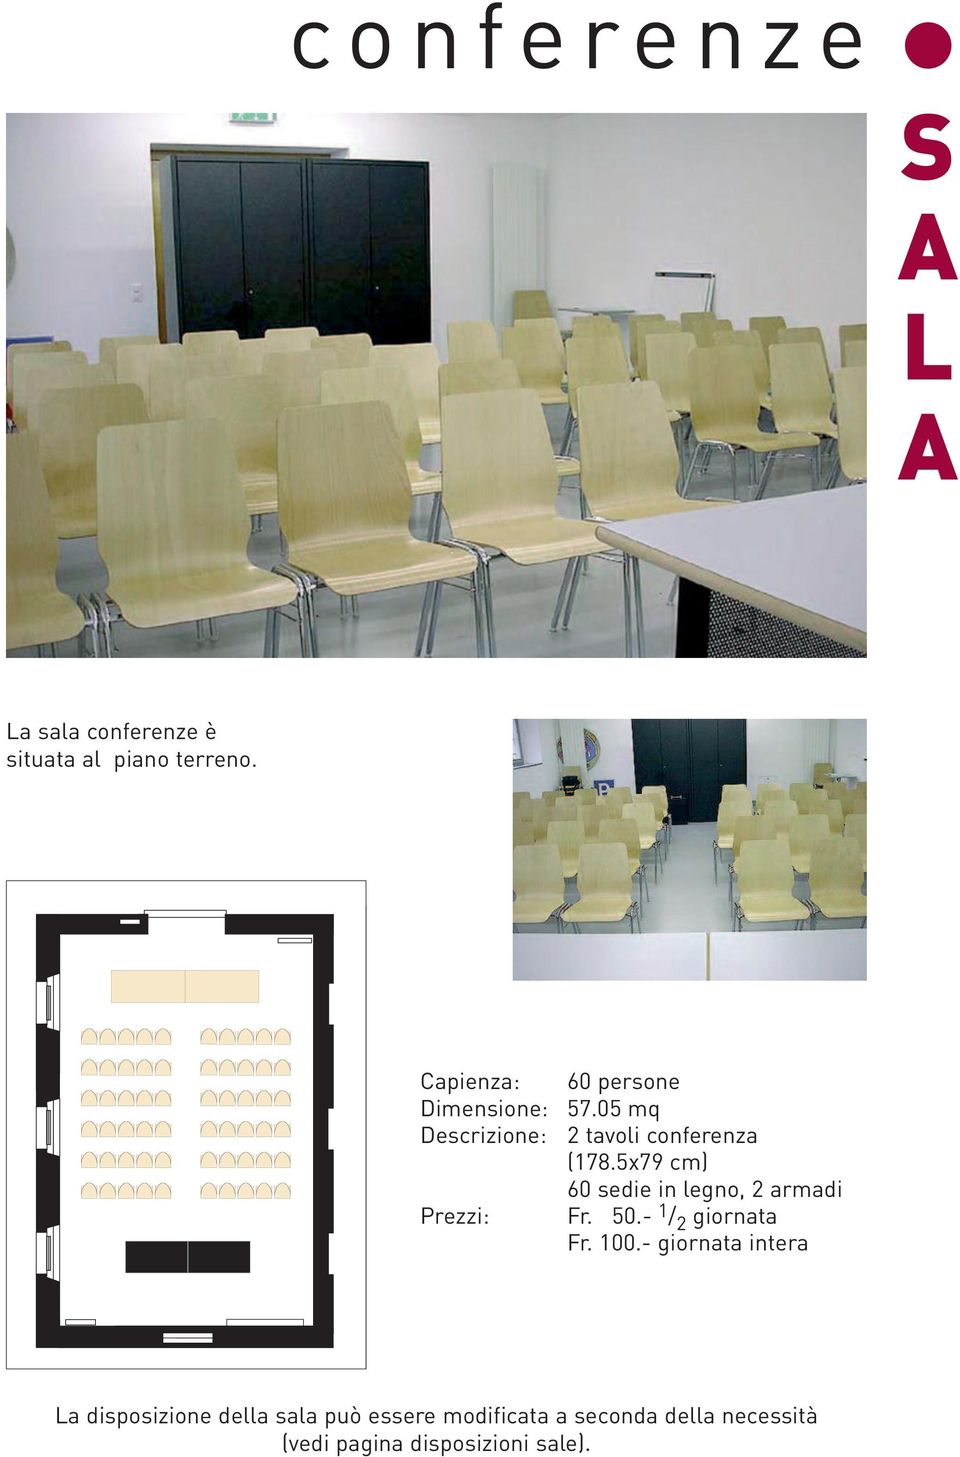 05 mq 2 tavoli conferenza (178.5x79 cm) 60 sedie in legno, 2 armadi Fr. 50.